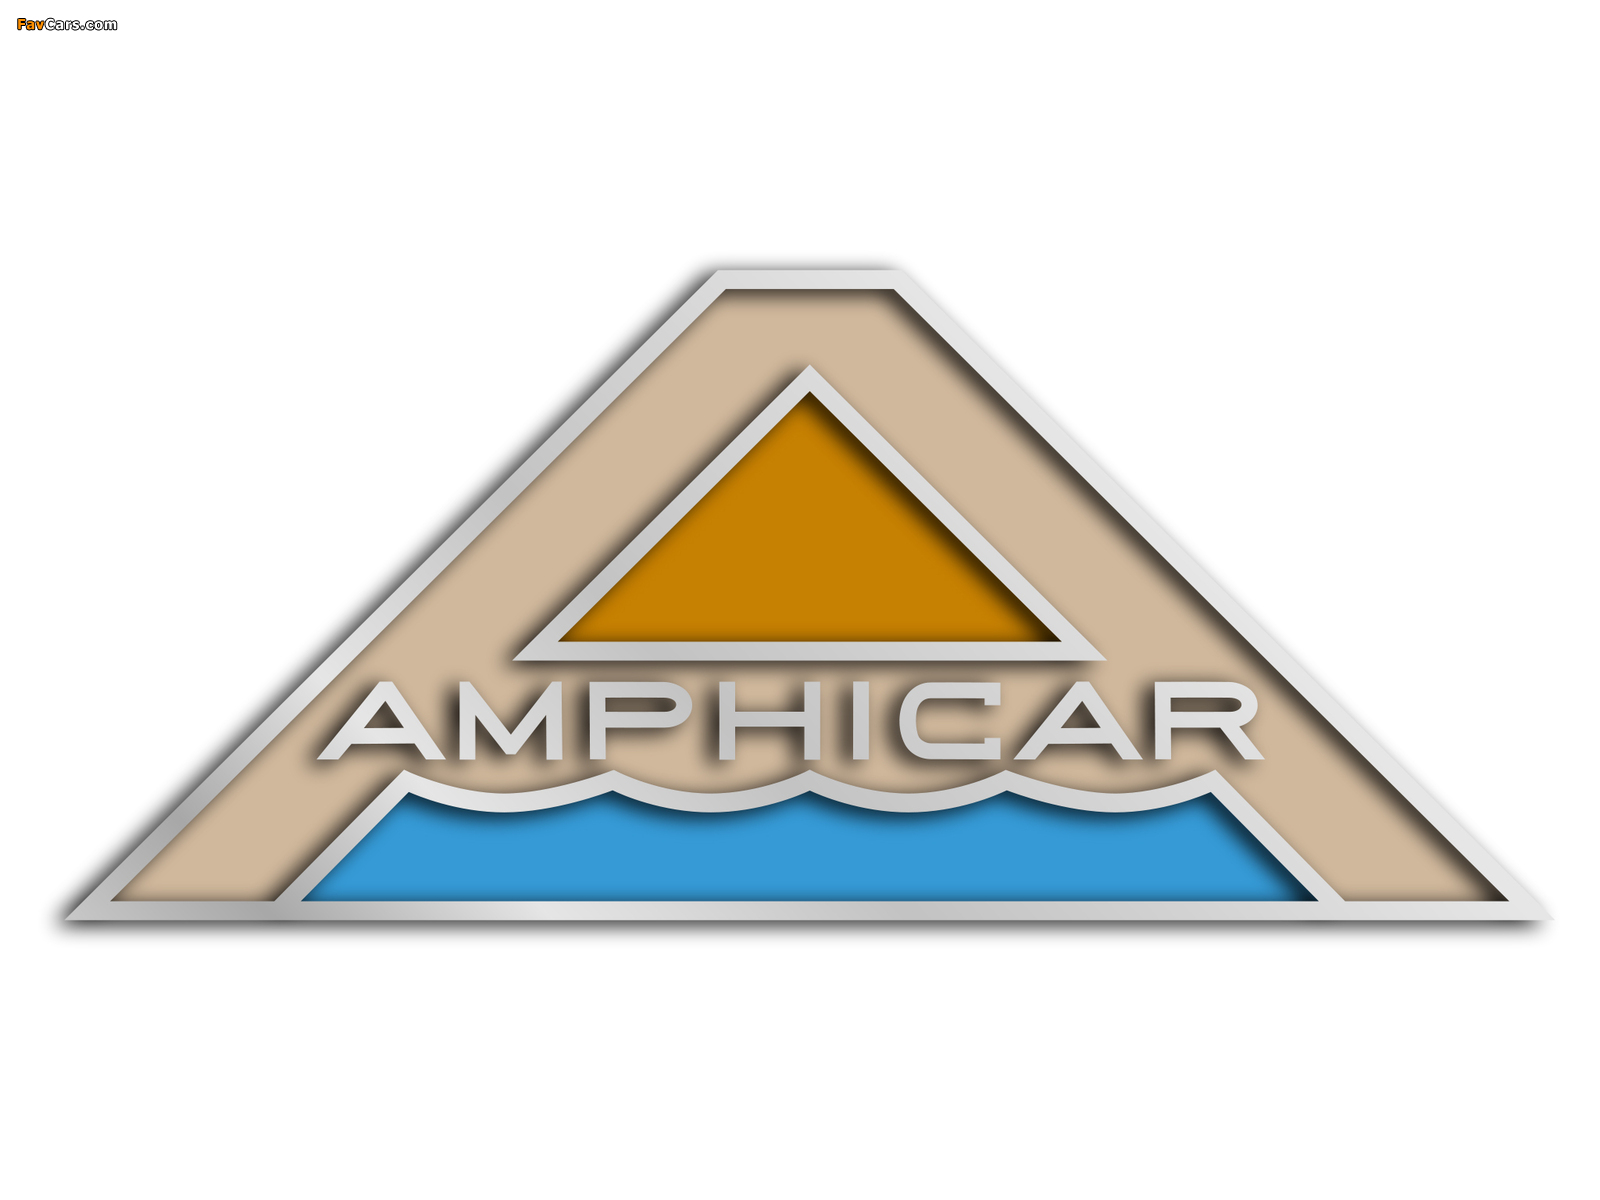 Amphicar photos (1600 x 1200)